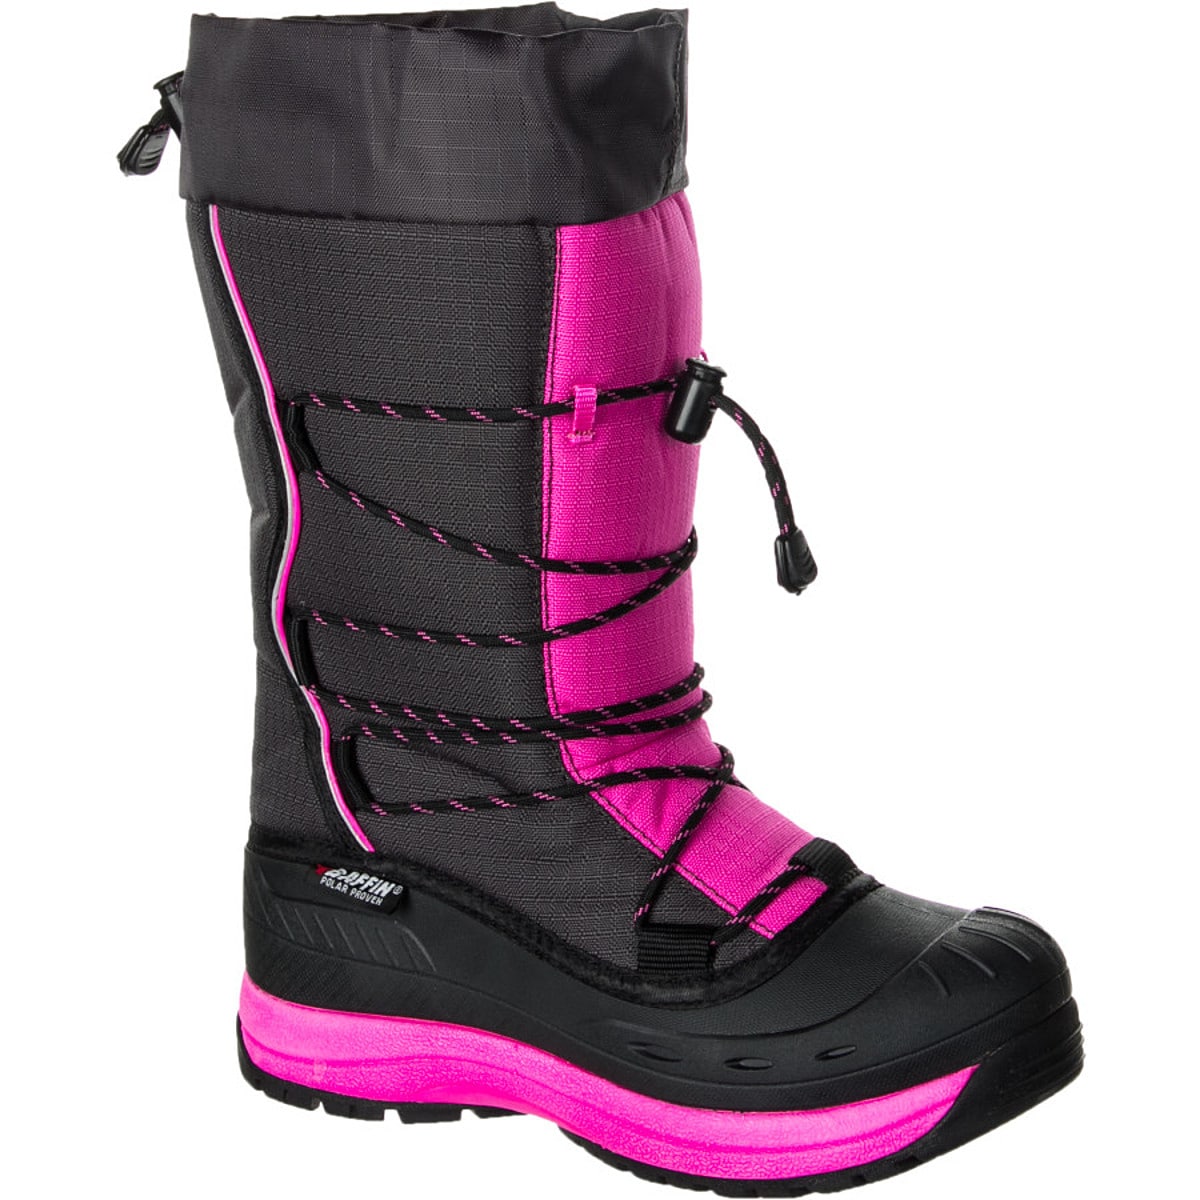 Snogoose Winter Boot - Women